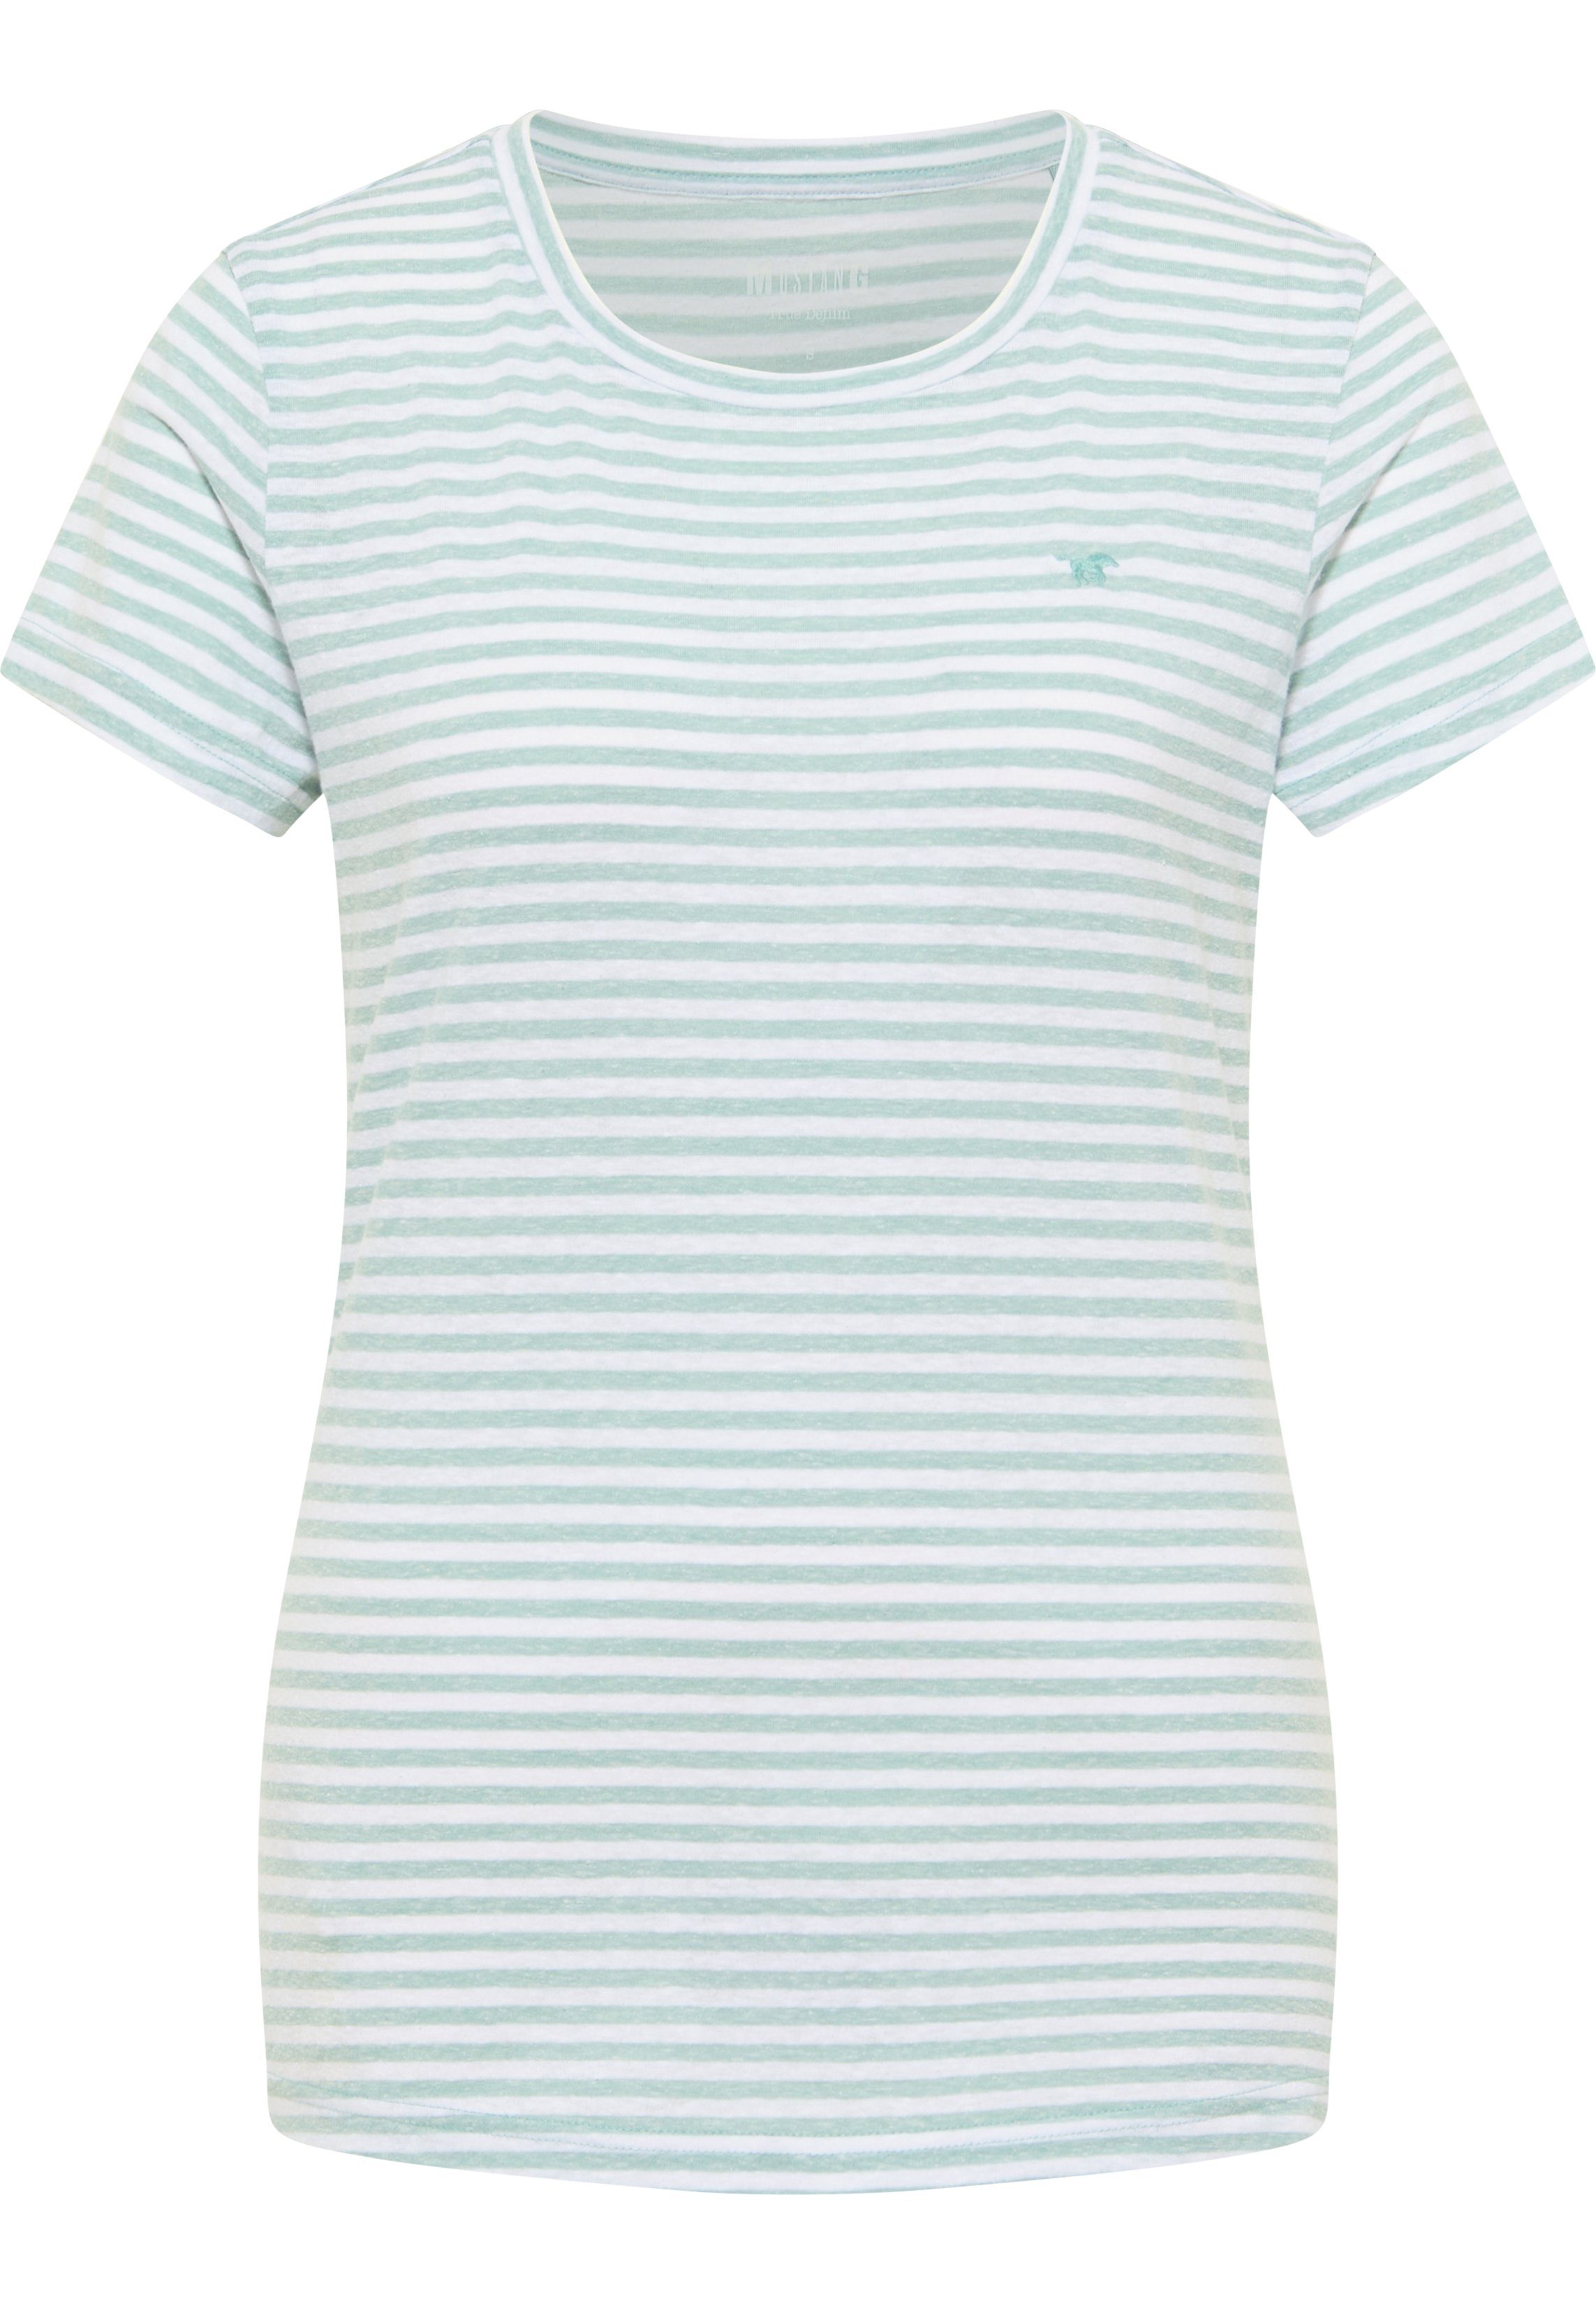 C grau-grün Stripe T-Shirt MUSTANG Alexia